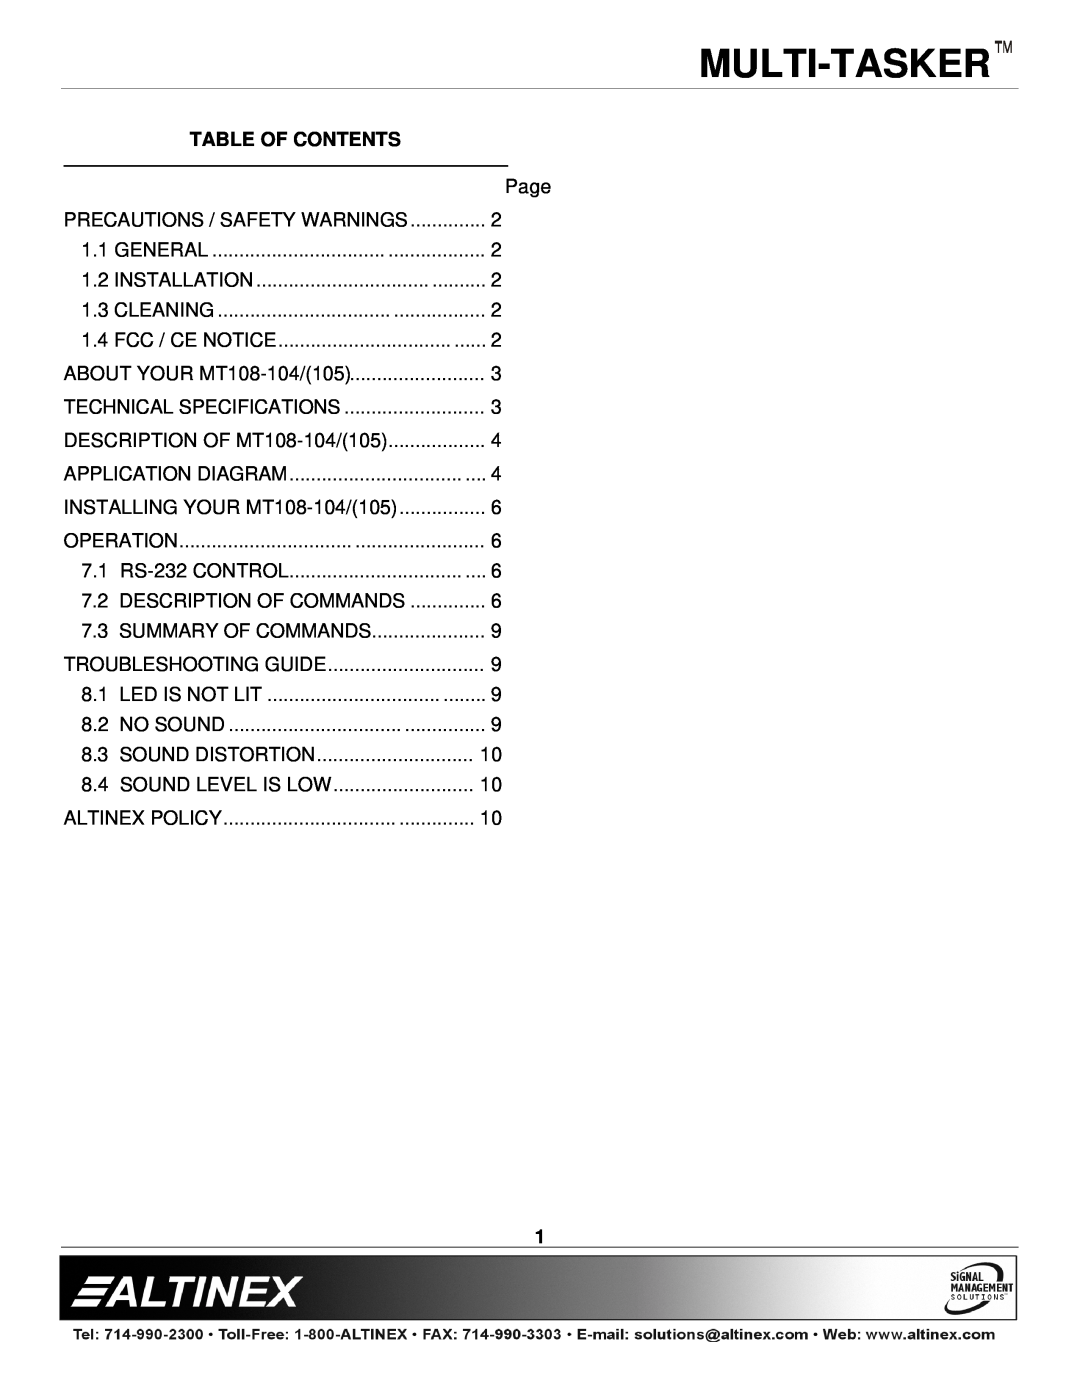 Altinex MT108-104, MT108-105 manual Table Of Contents, Multi-Tasker 